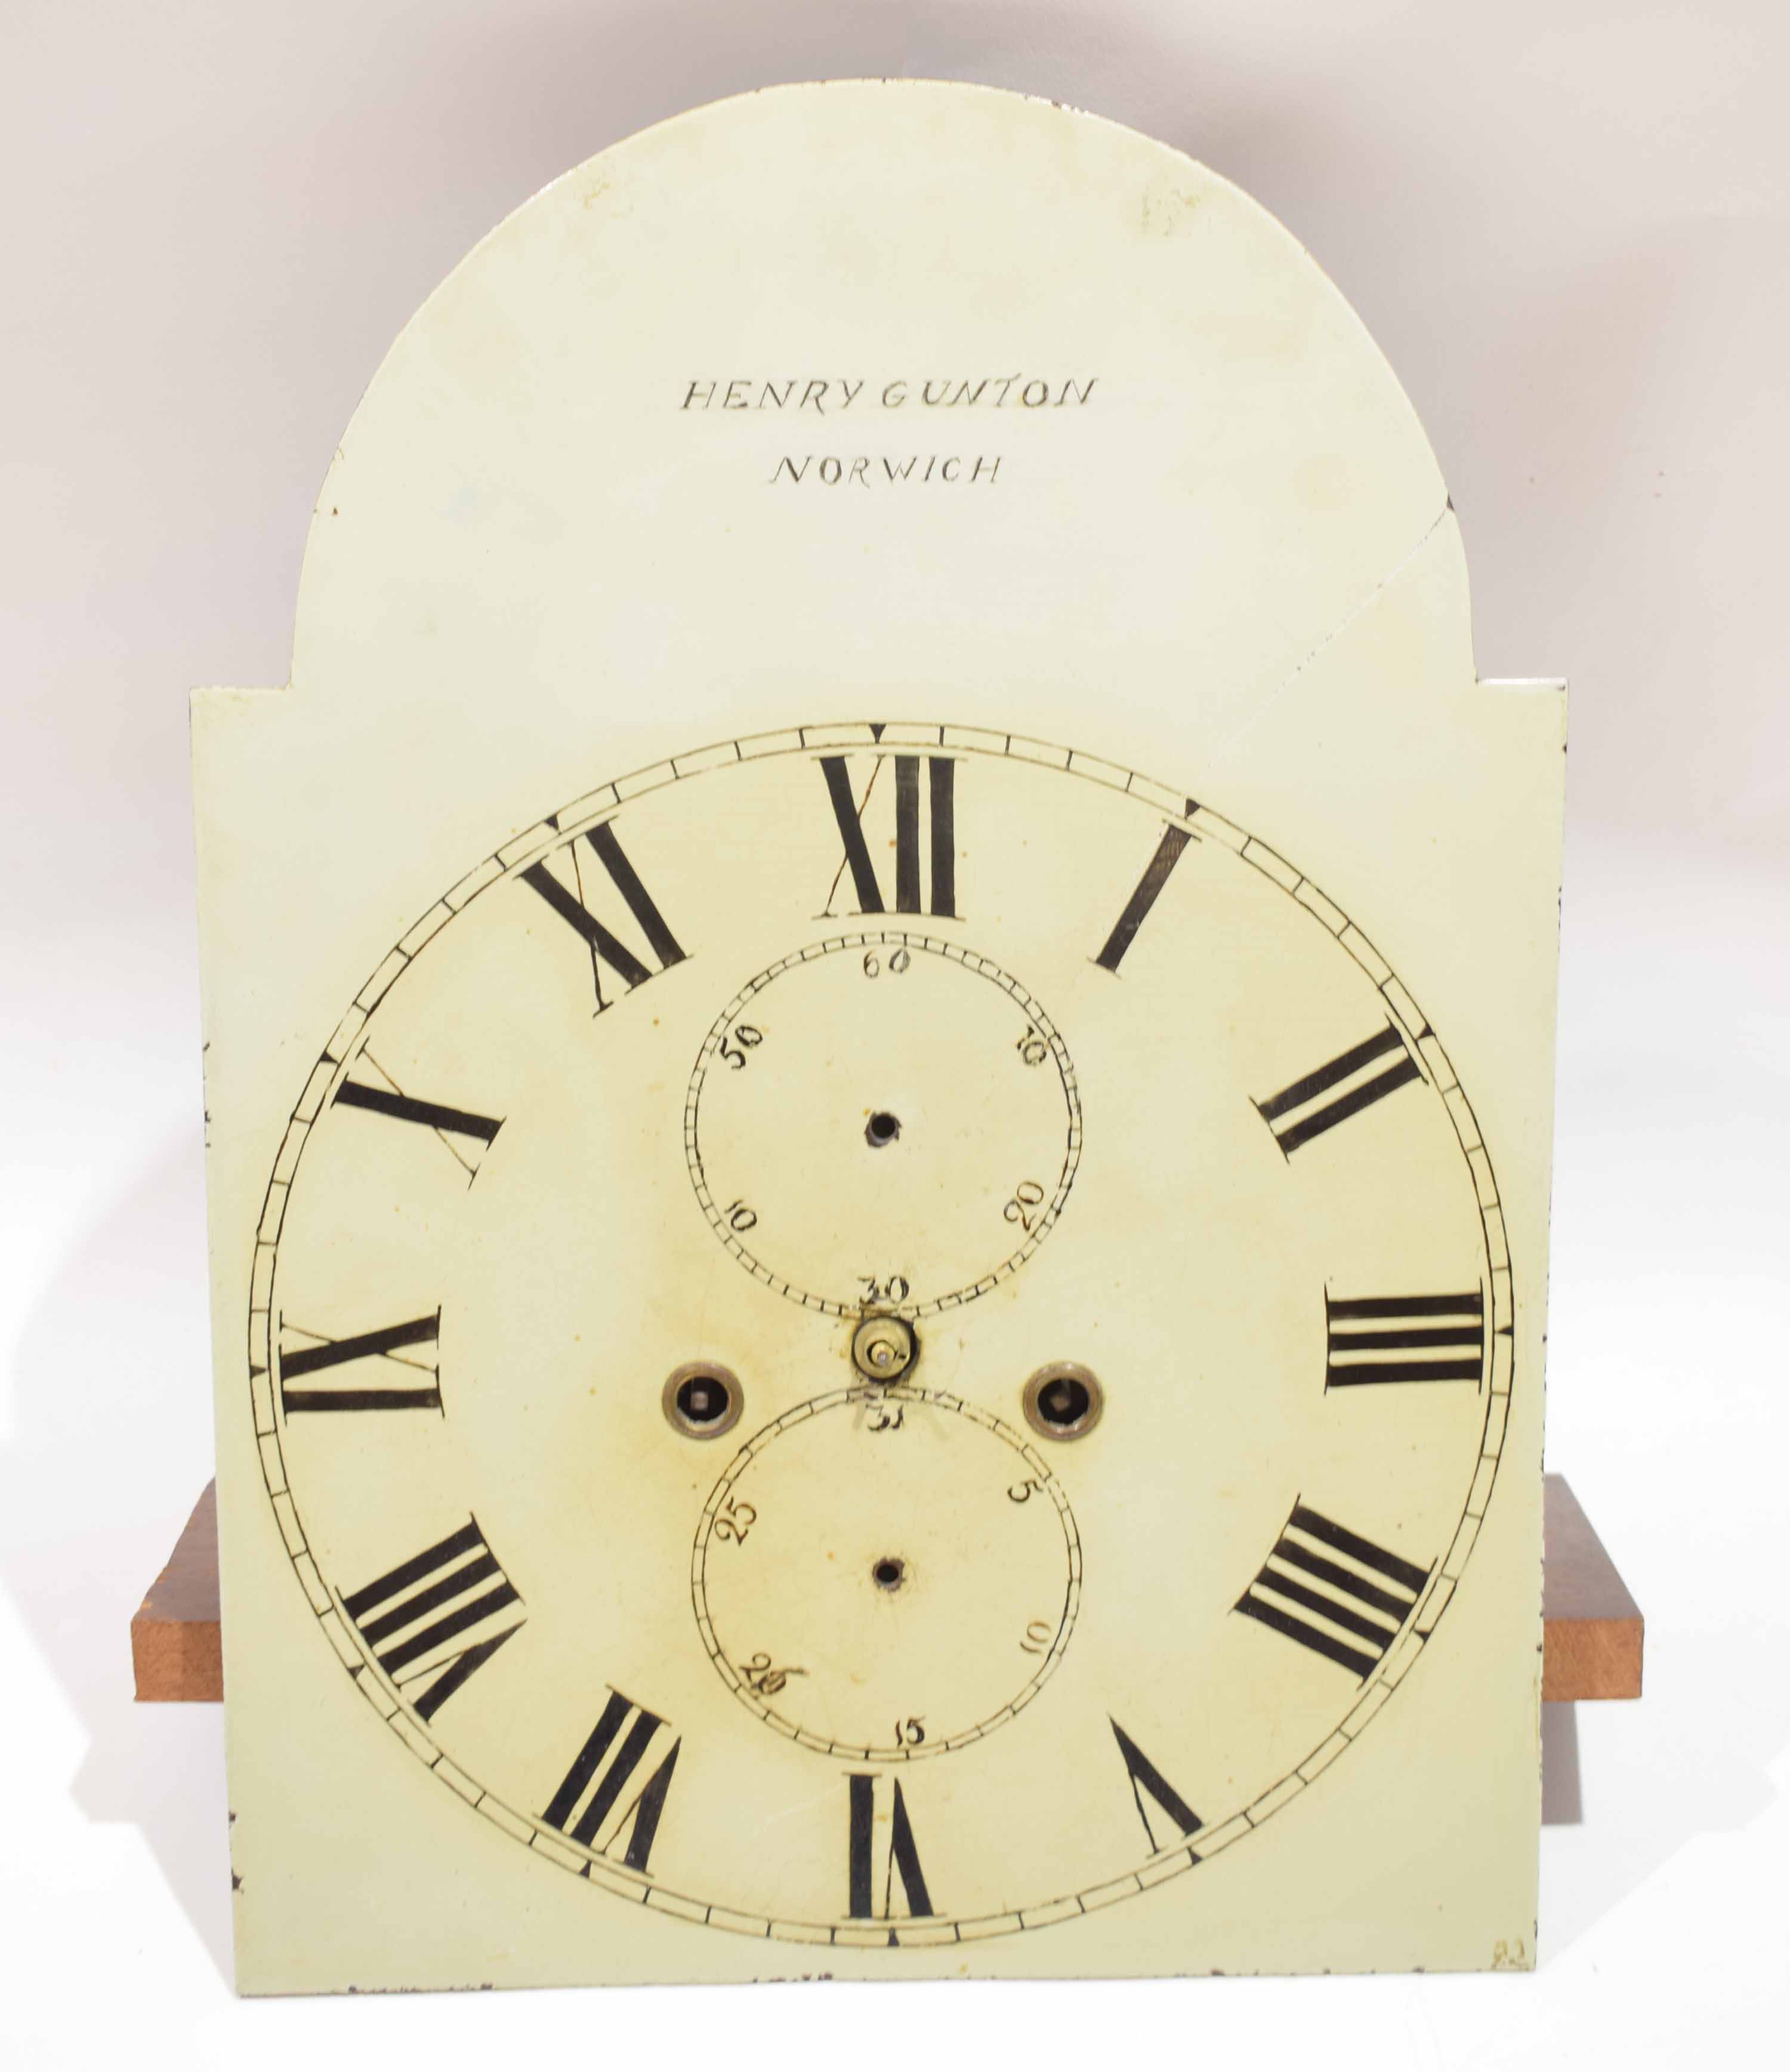 Longcase clock face, movement and pendulum, inscribed "Henry Gunton, Norwich", 45cm high - Image 2 of 6